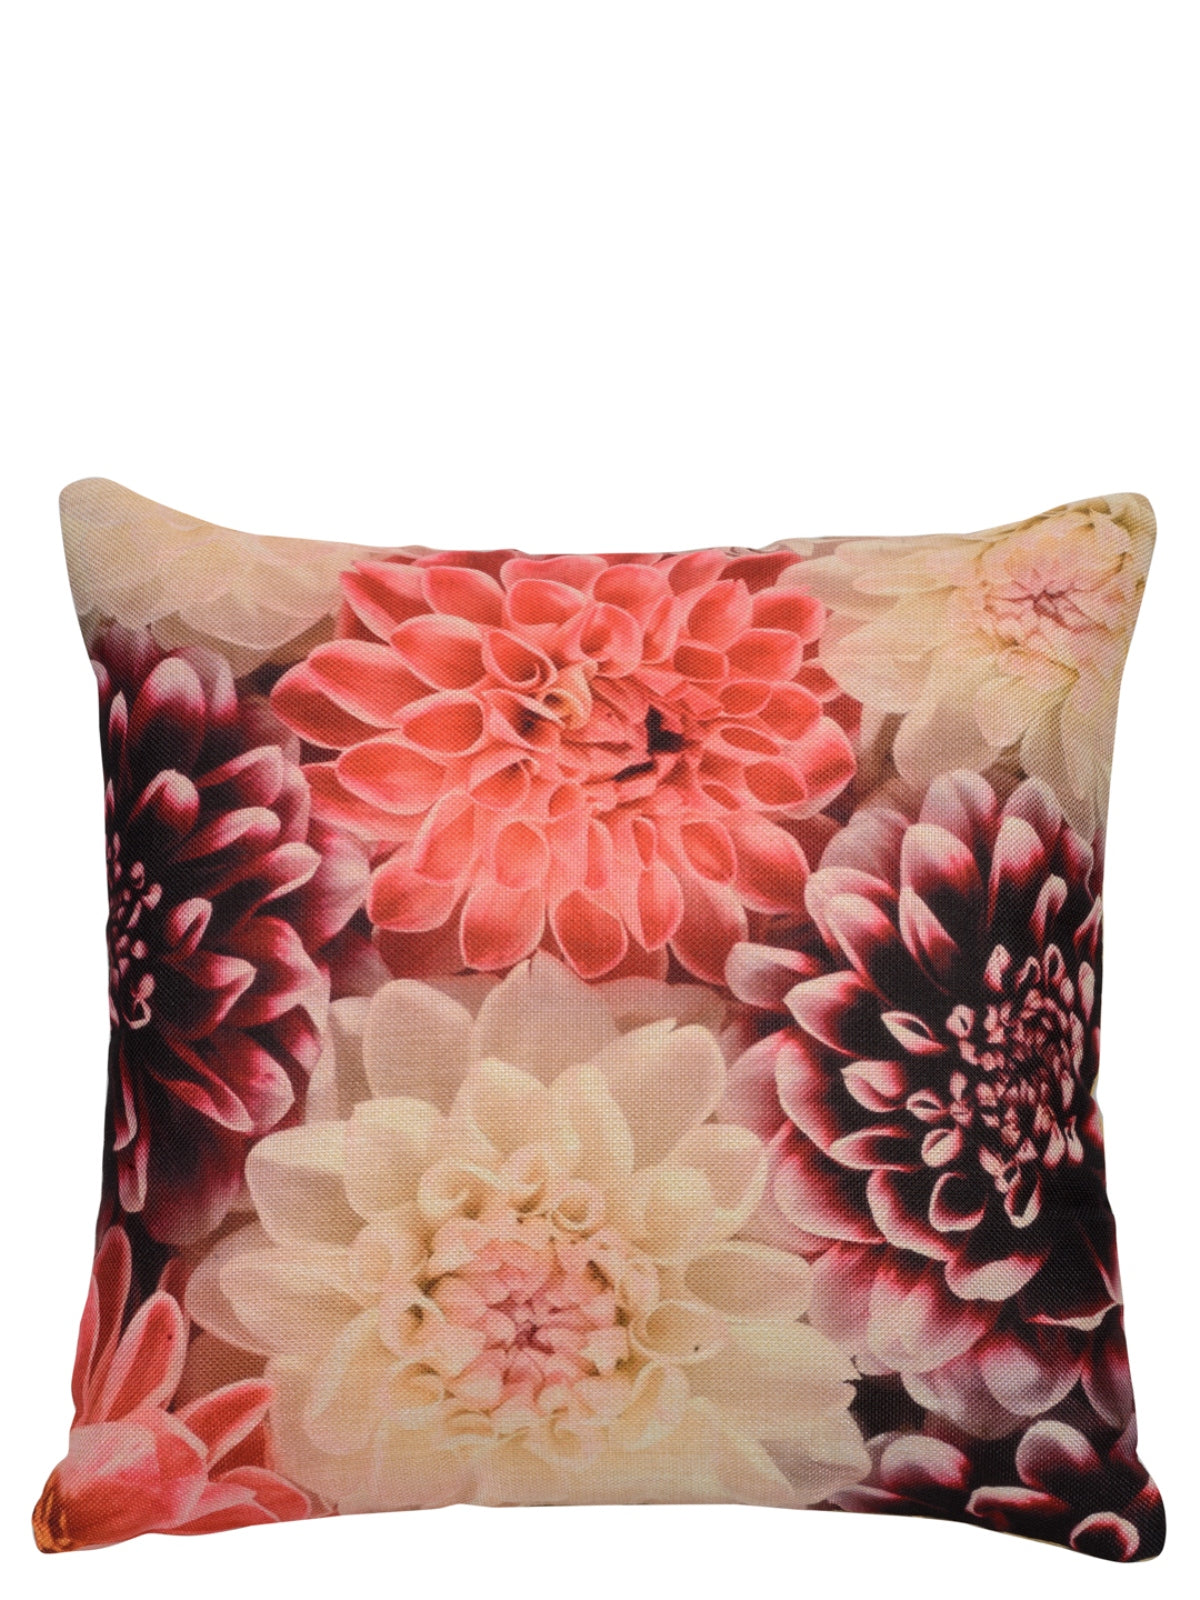 Soft Jute Floral Print Throw Pillow/Cushion Covers 40cm x 40cm Set of 5 - Multicolor